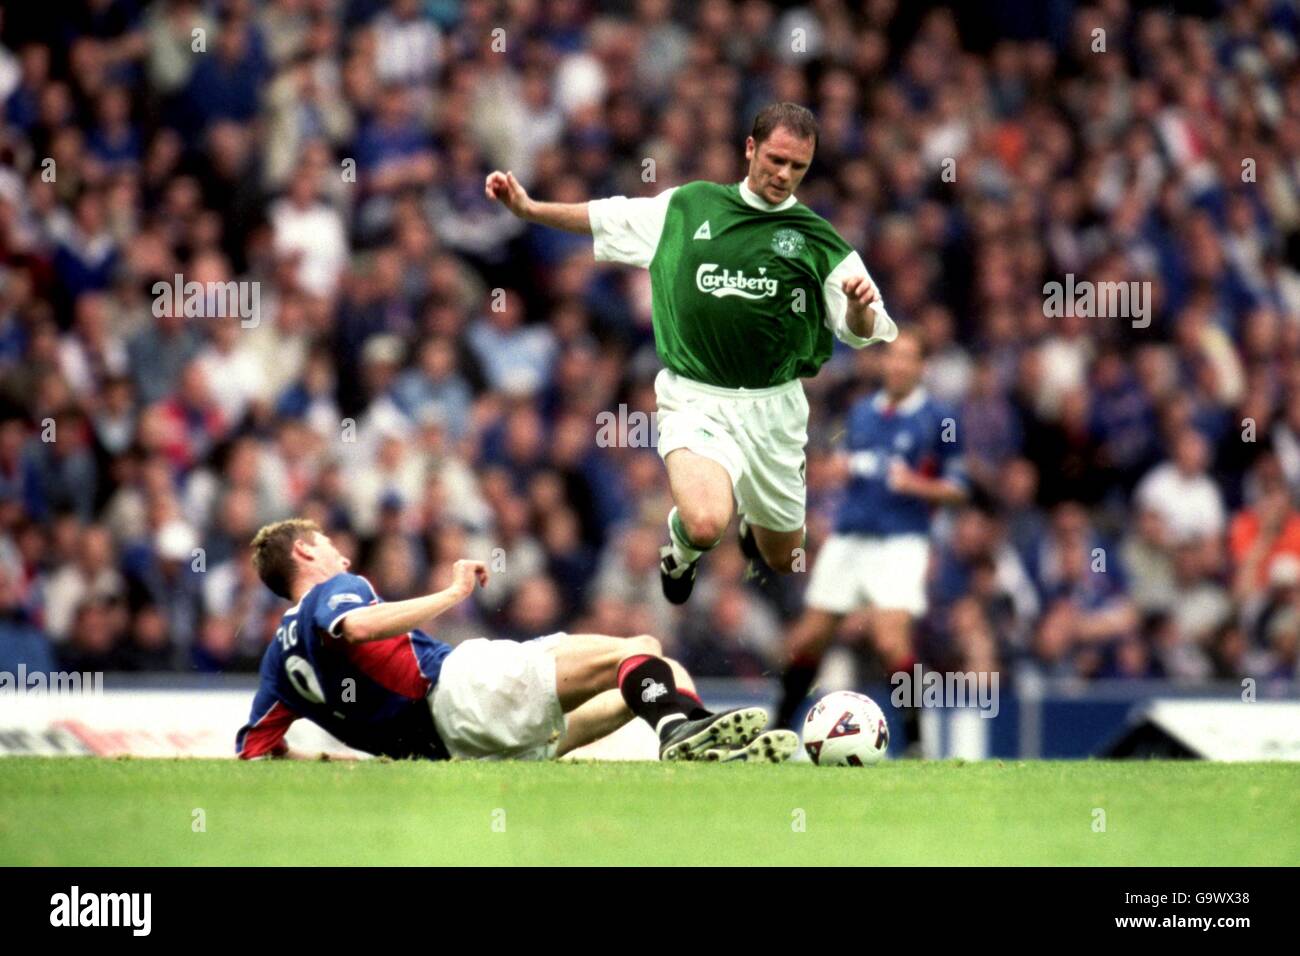 Scottish Soccer - Bank of Scotland Premier League - Rangers v Hibernian. Rangers Tore Andre Flo challenges Hibernian's John O'Neil. Stock Photo